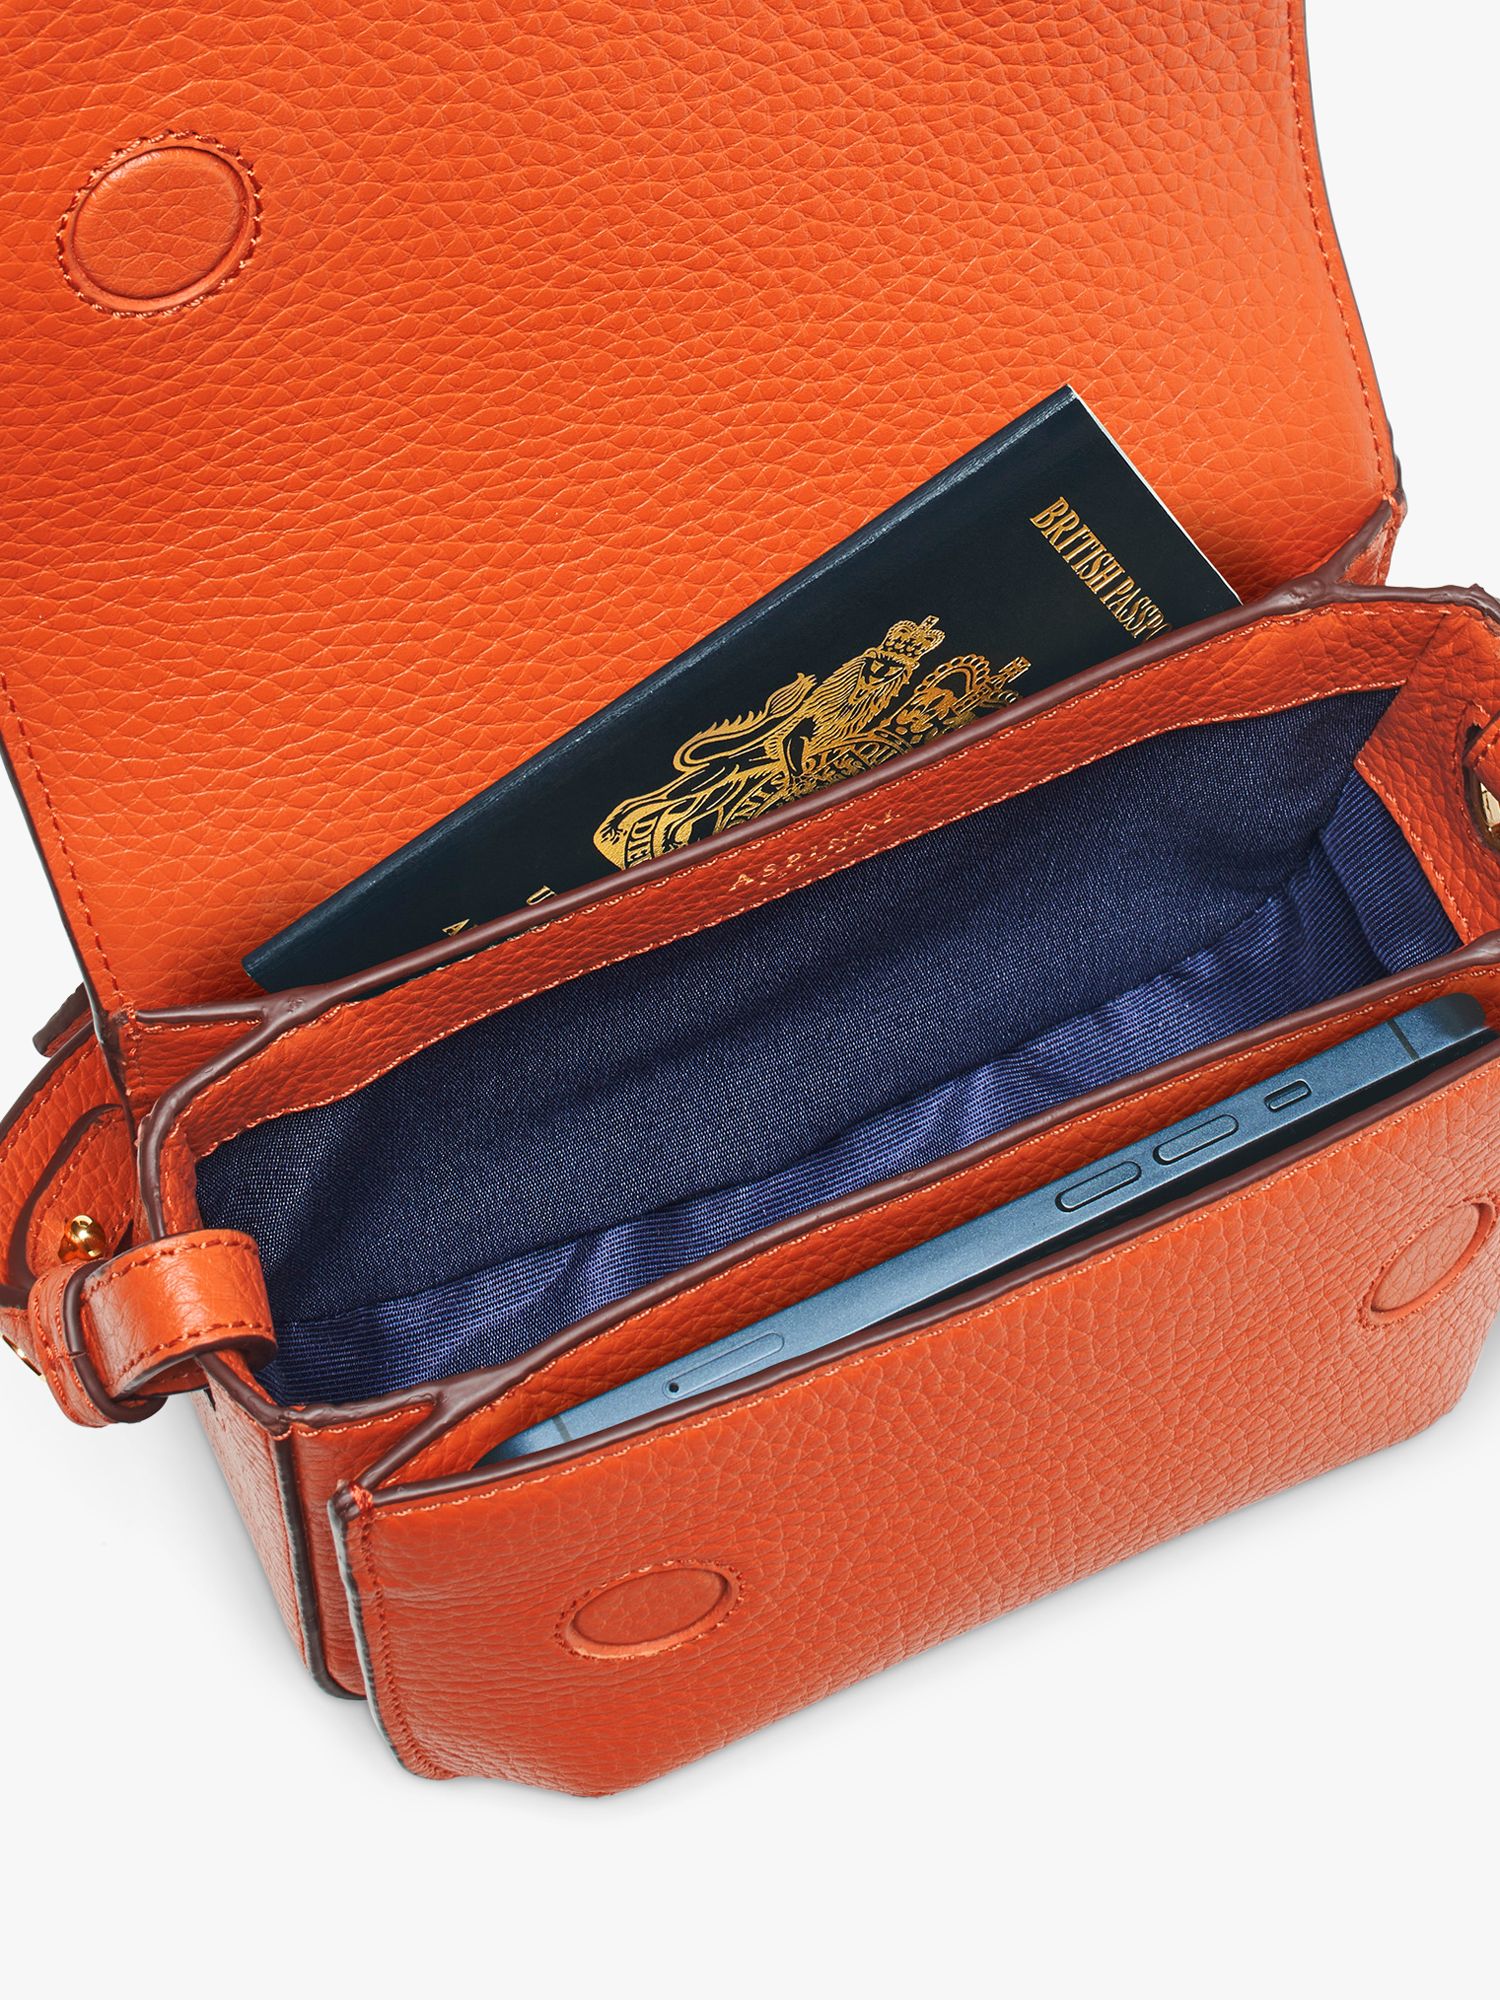 Buy Aspinal of London Ella Pebble Leather Crossbody Bag Online at johnlewis.com